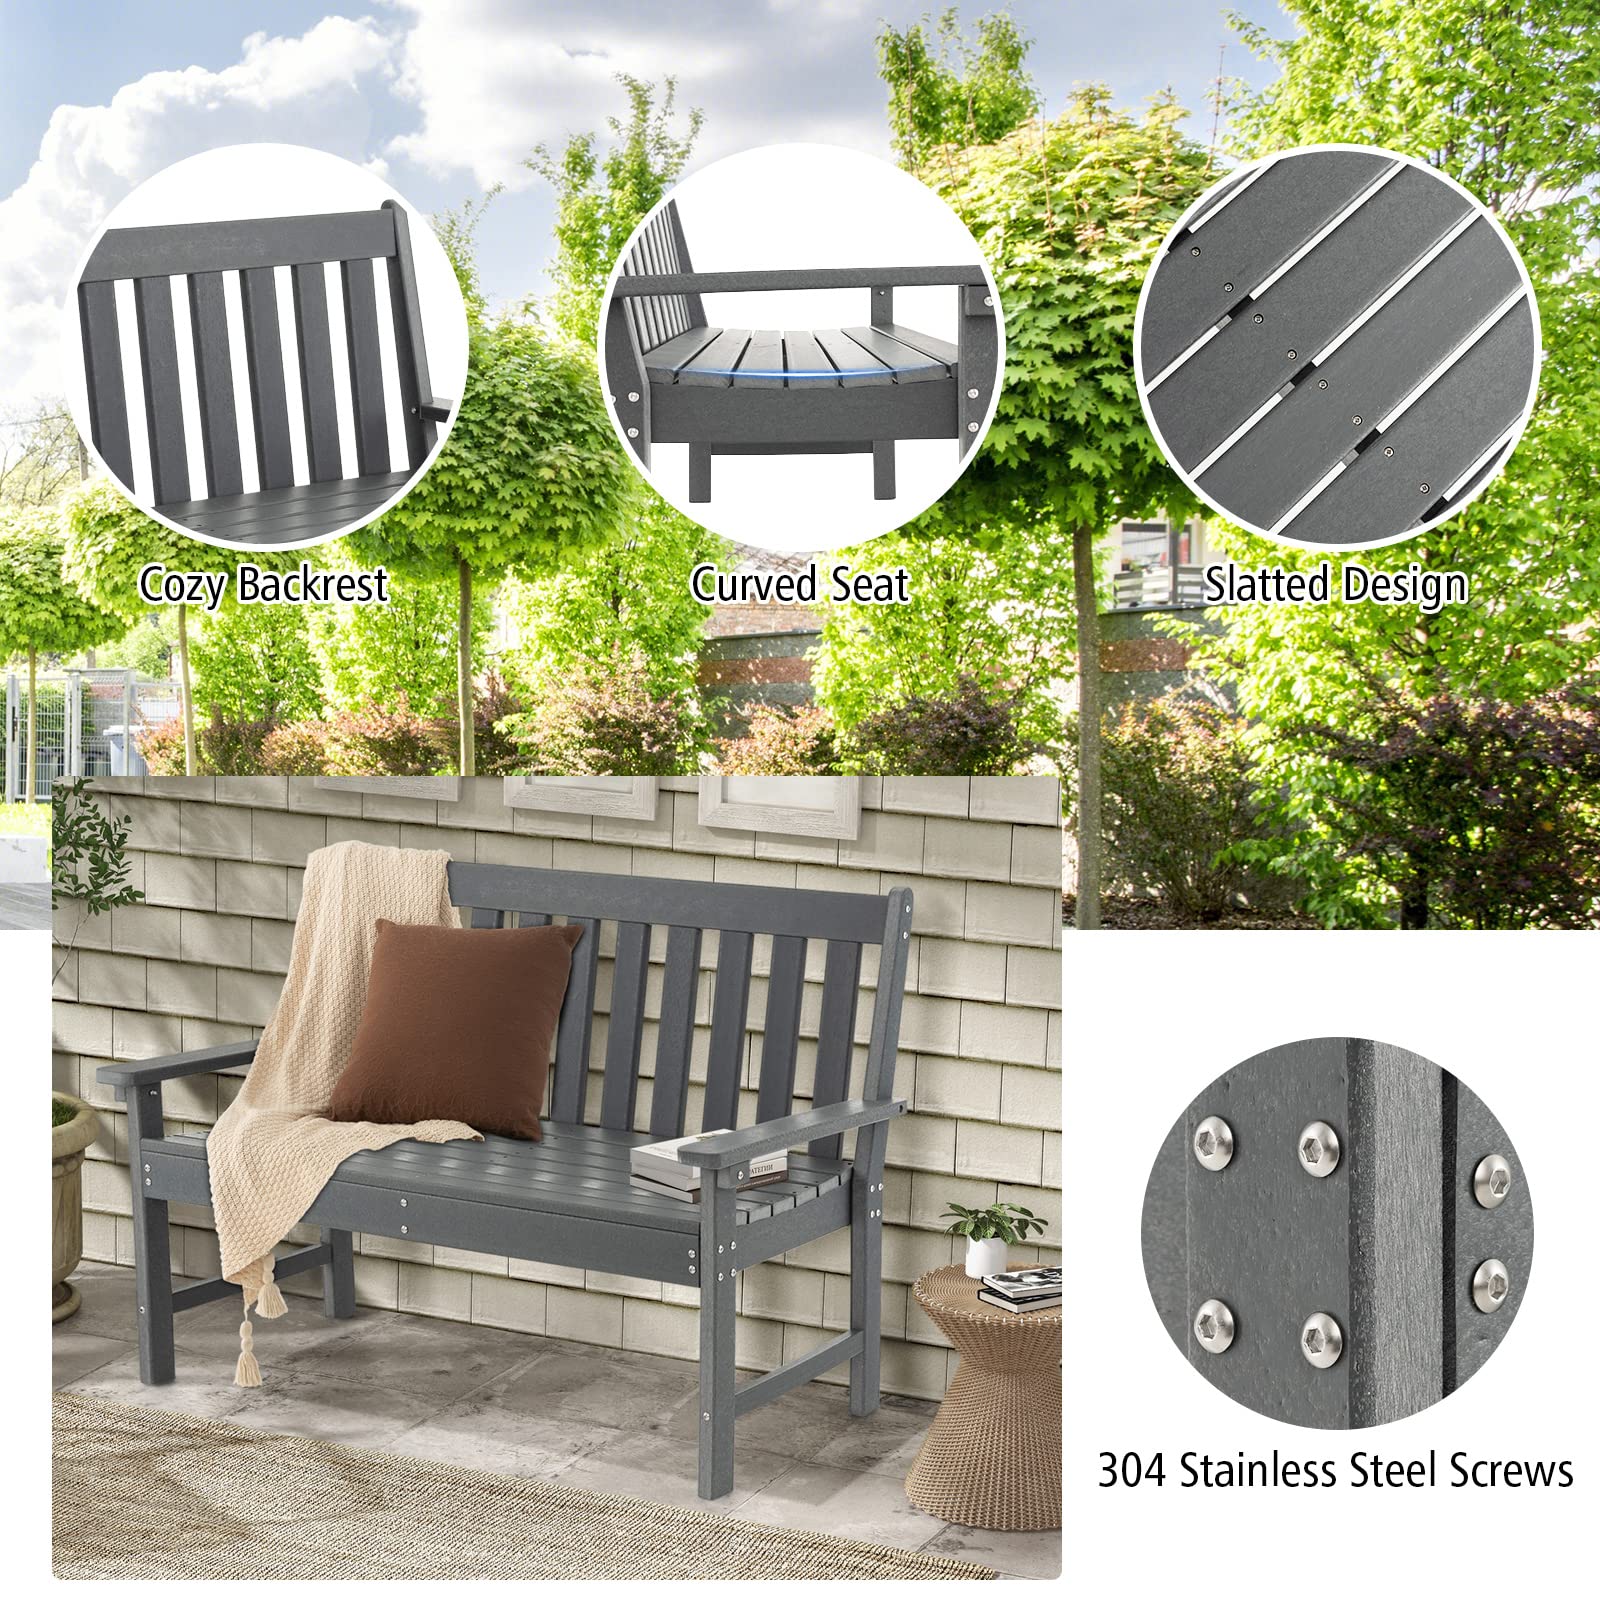 Giantex 52-Inch Outdoor Garden Bench - Outside Bench All-Weather HDPE Park Bench